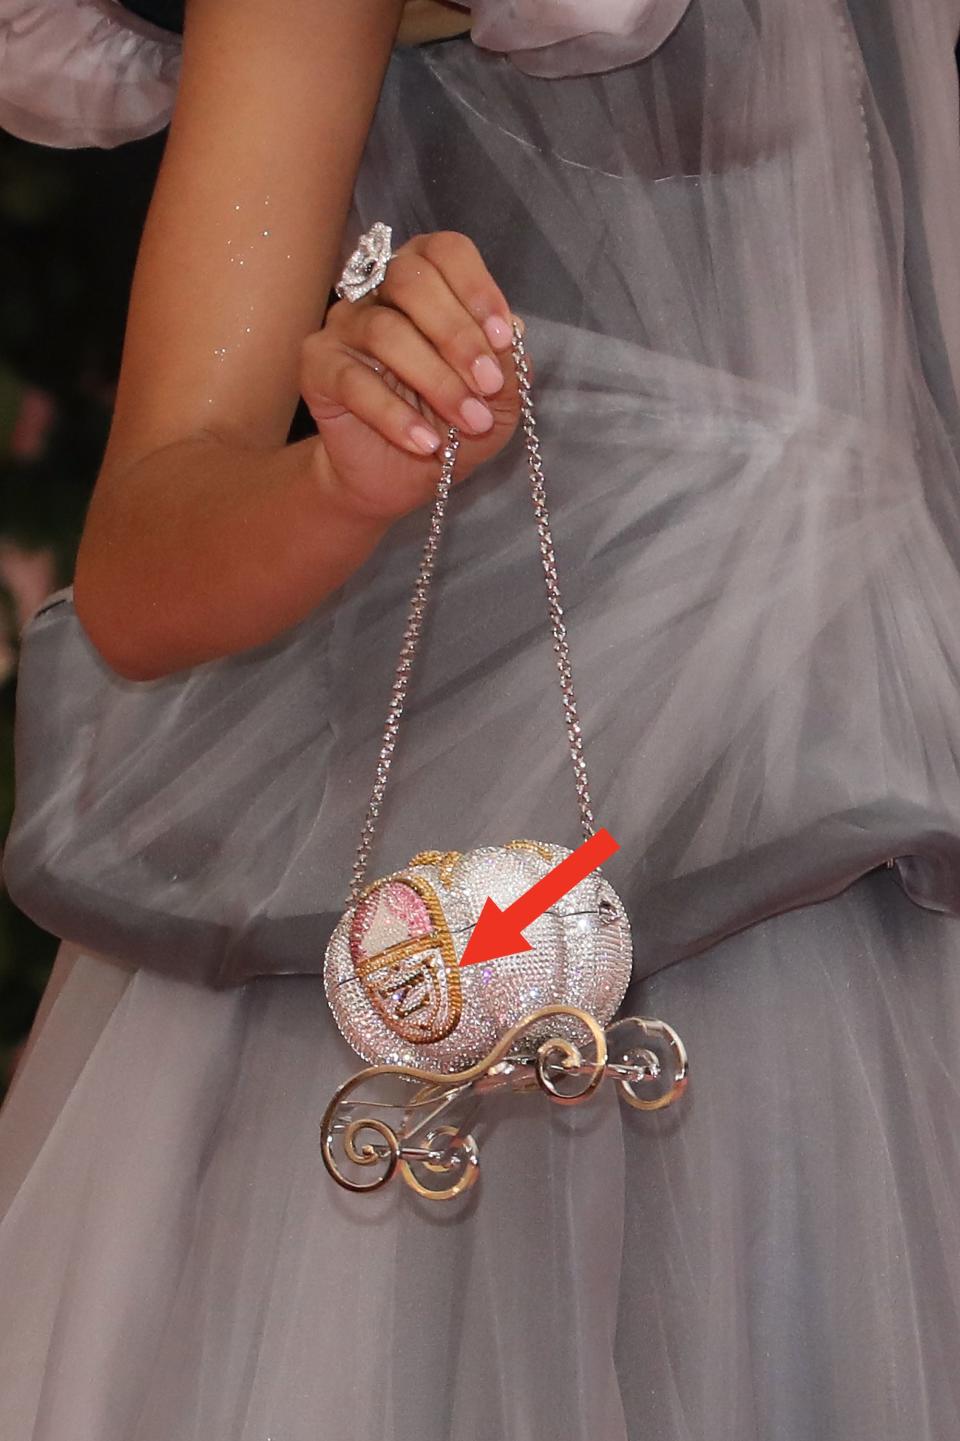 Zendaya holding a sparkling pumpkin carriage-shaped purse at the Met Gala